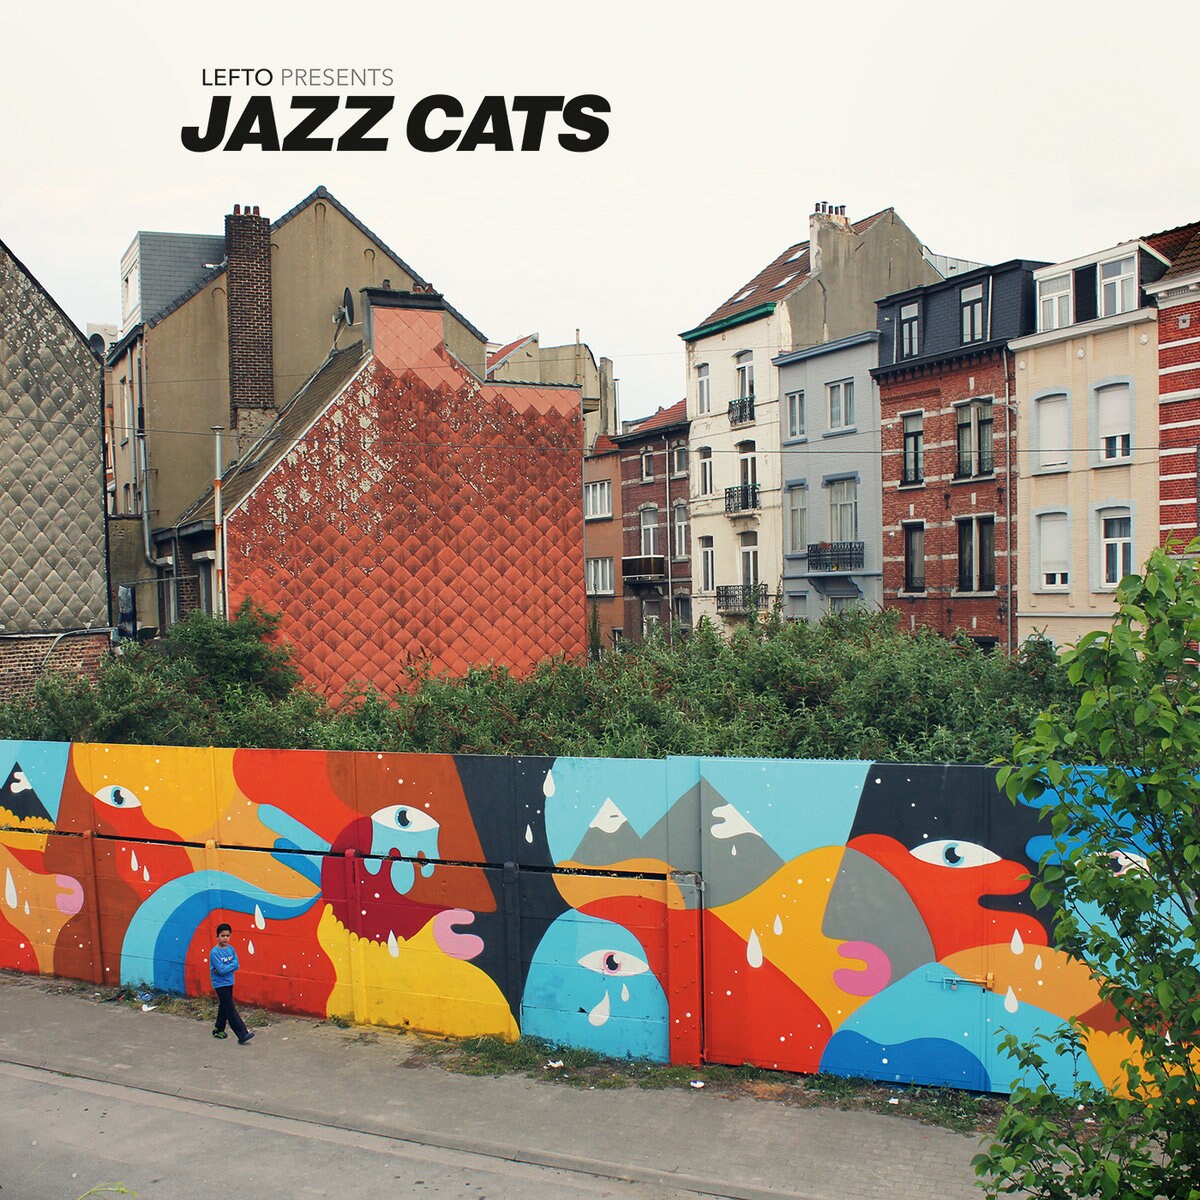 2. Various Artists - Lefto presents Jazz Cats